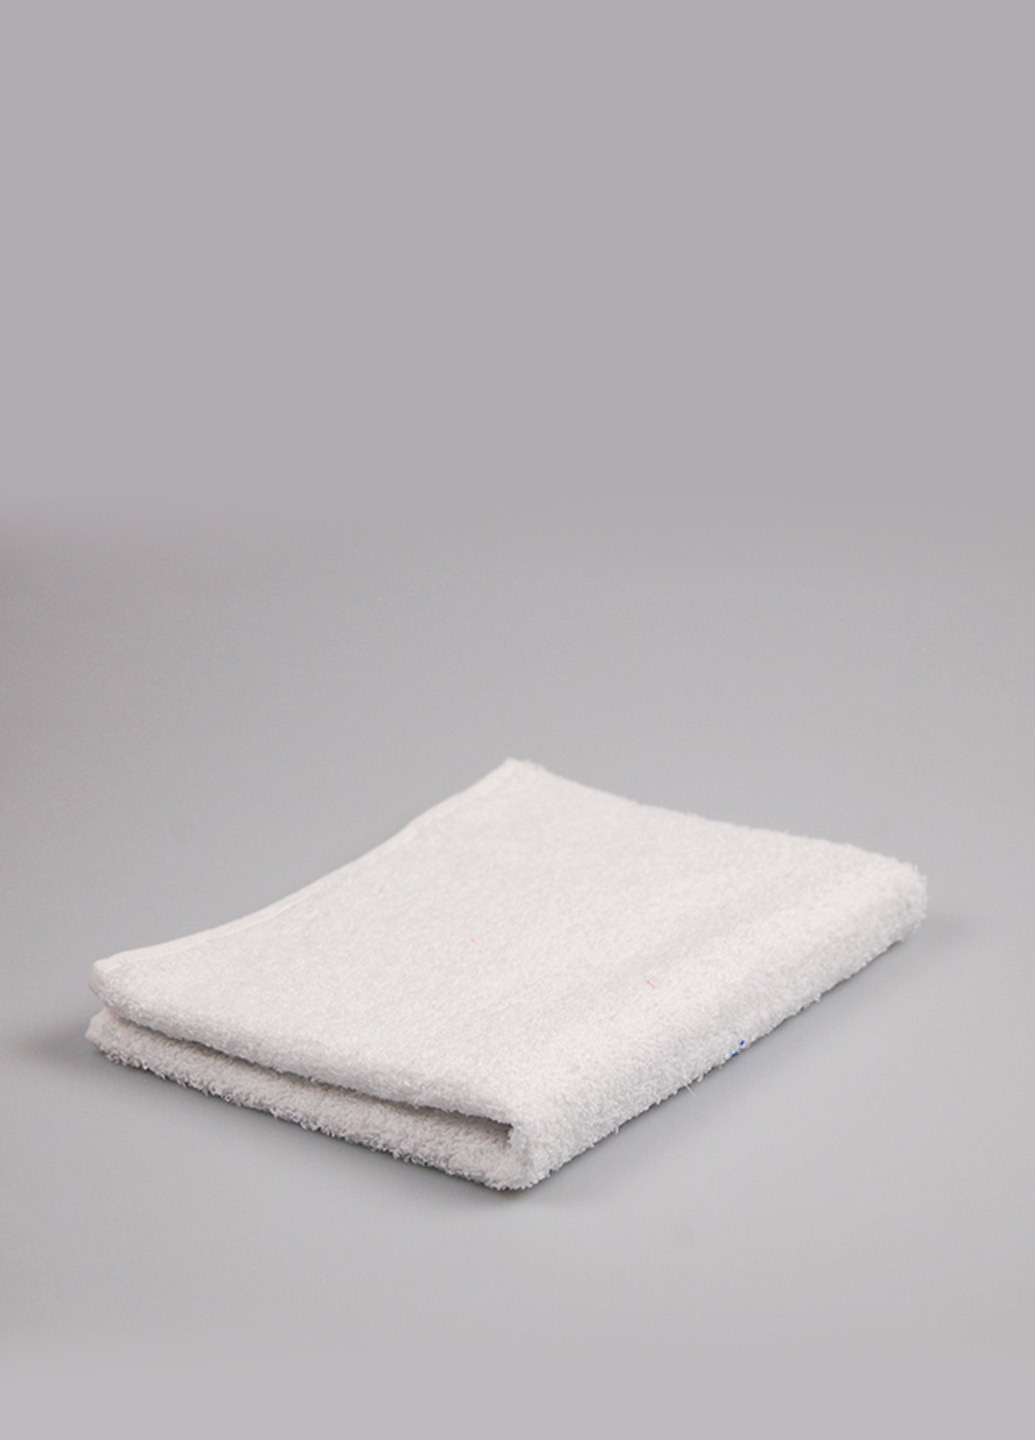 No Brand полотенце, 30х45 см однотонный белый производство - Индия